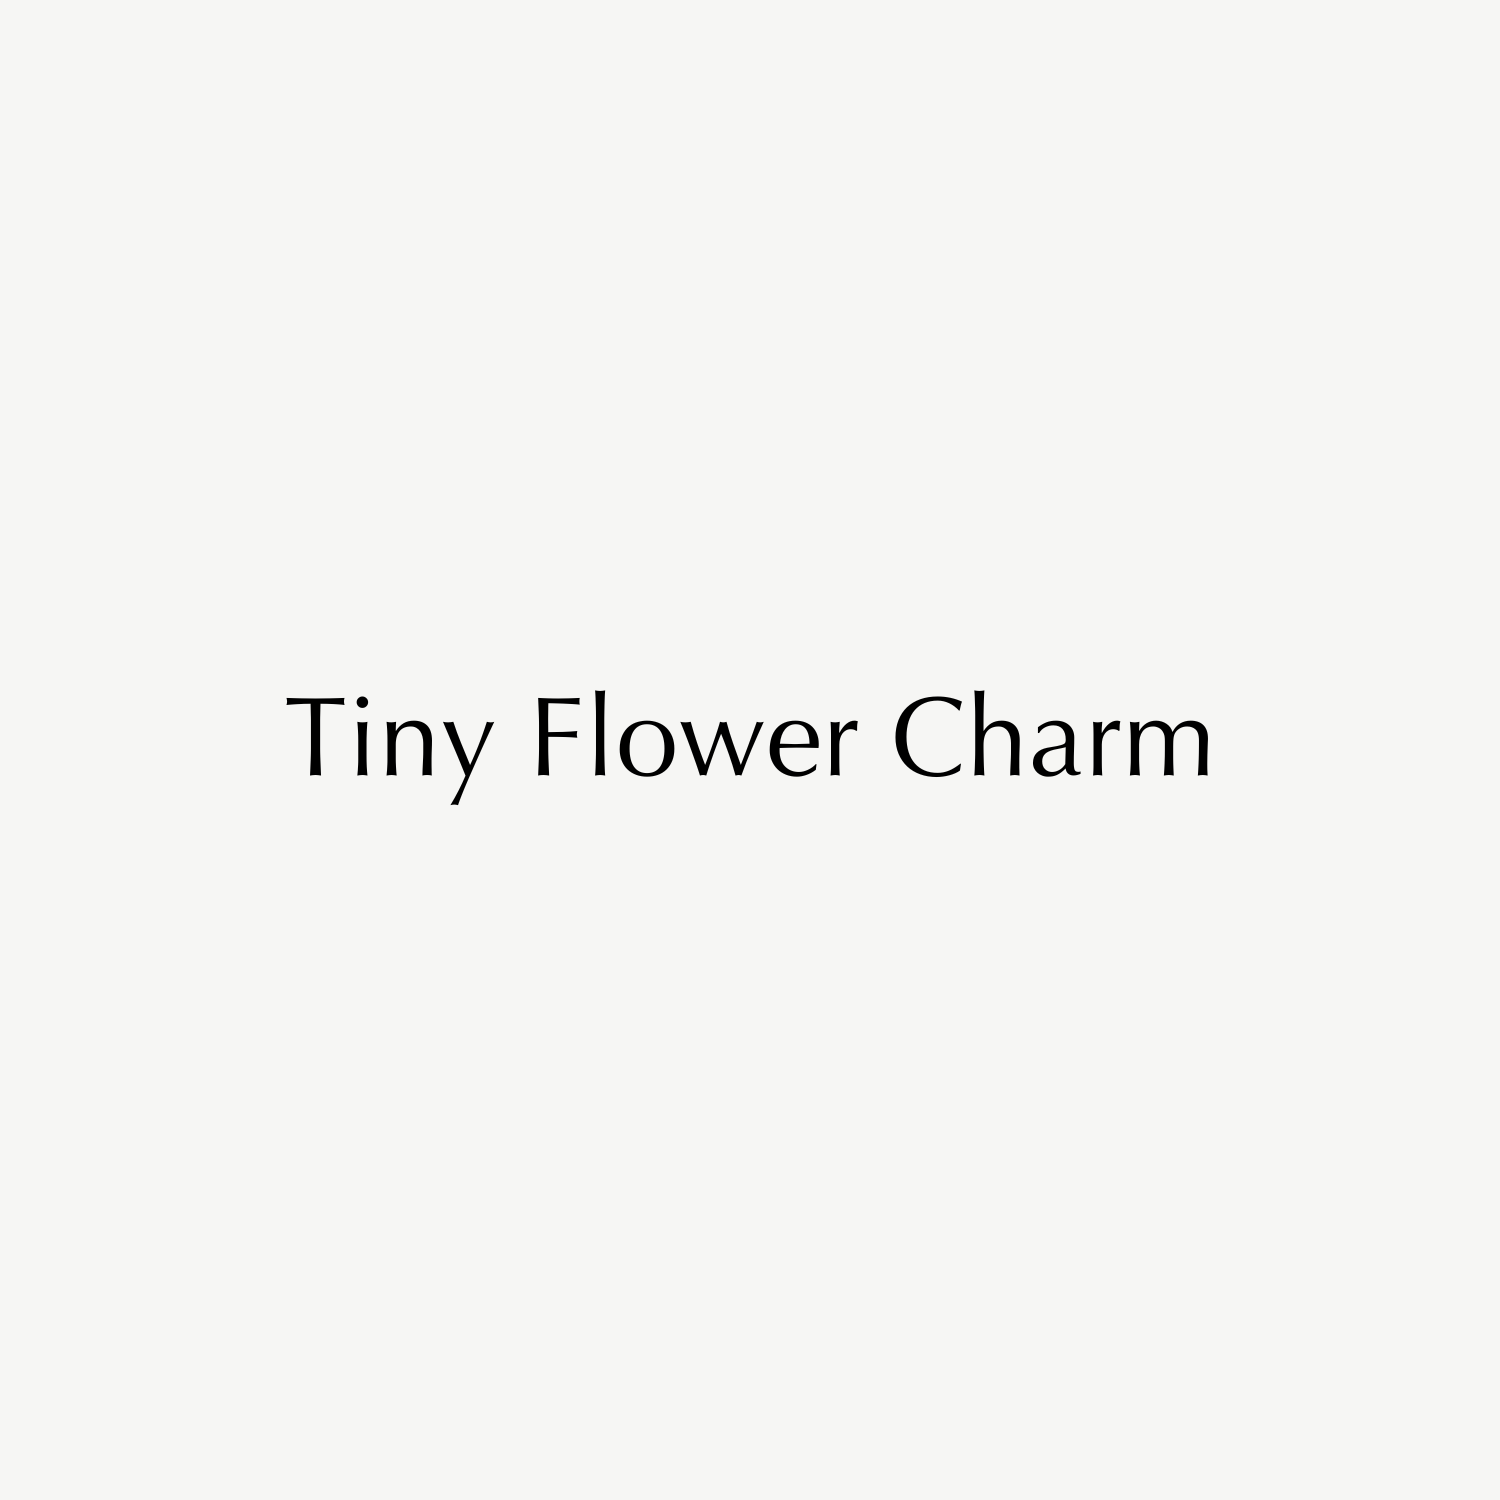 Tiny Flower Charm